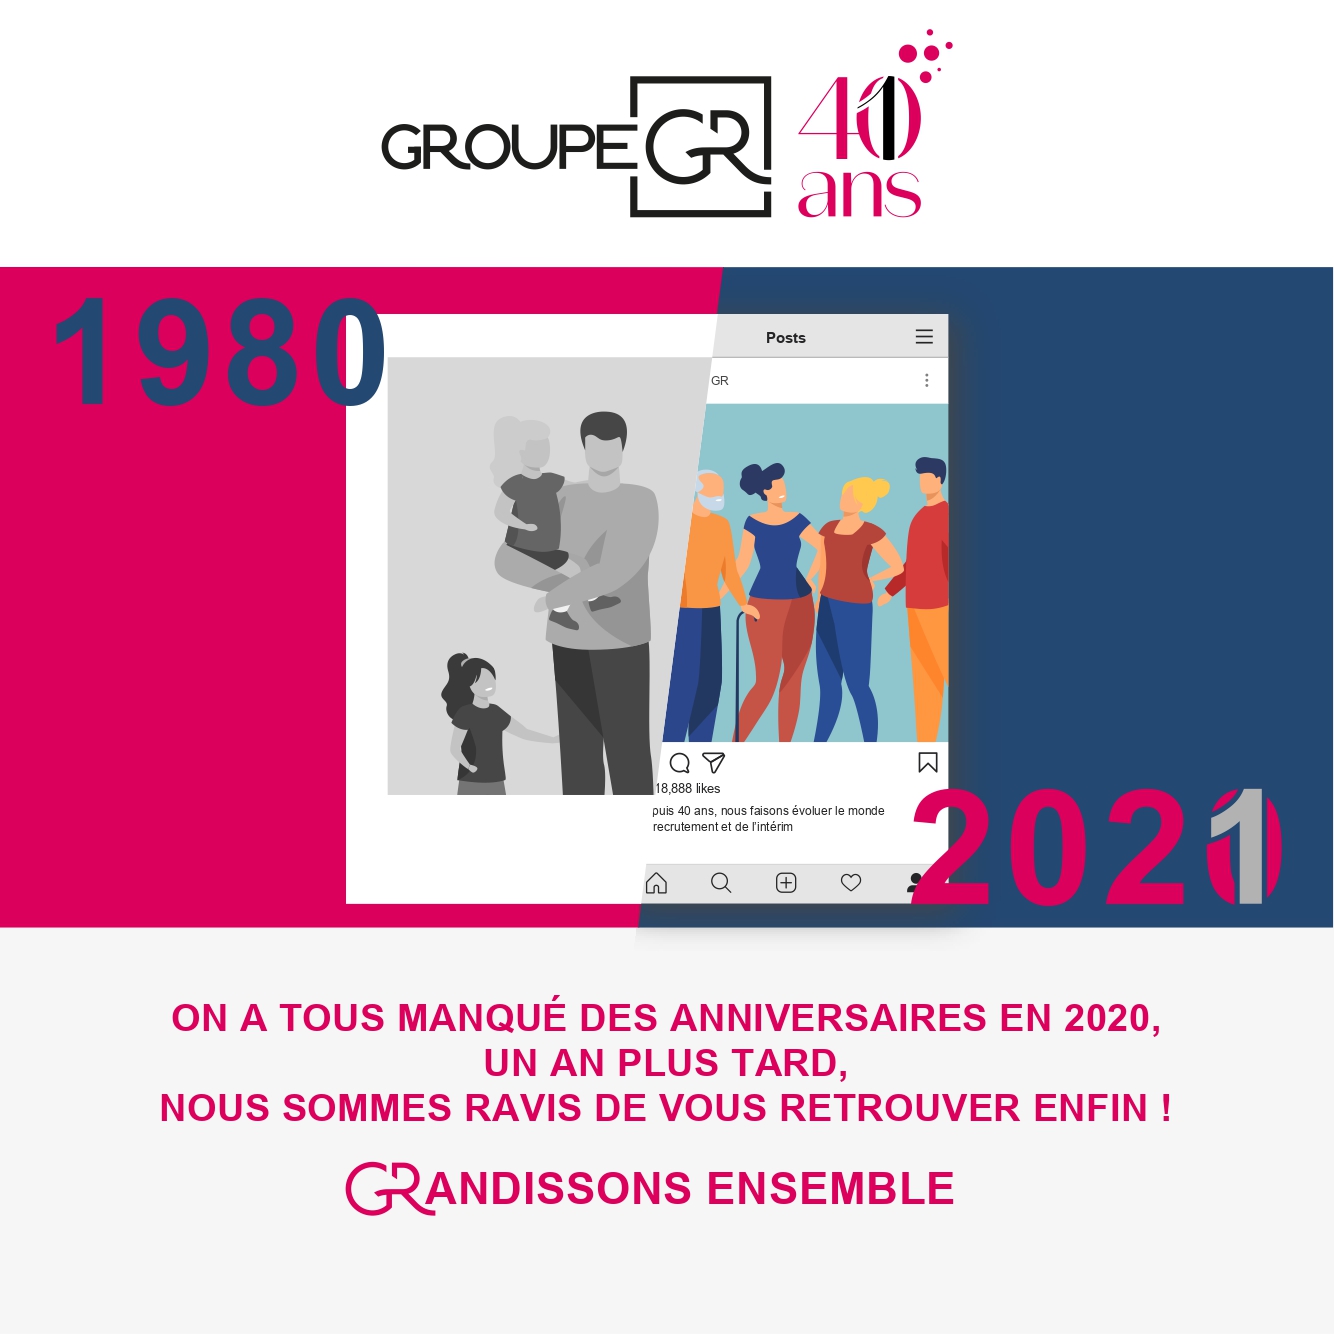 Groupe GR 41ans